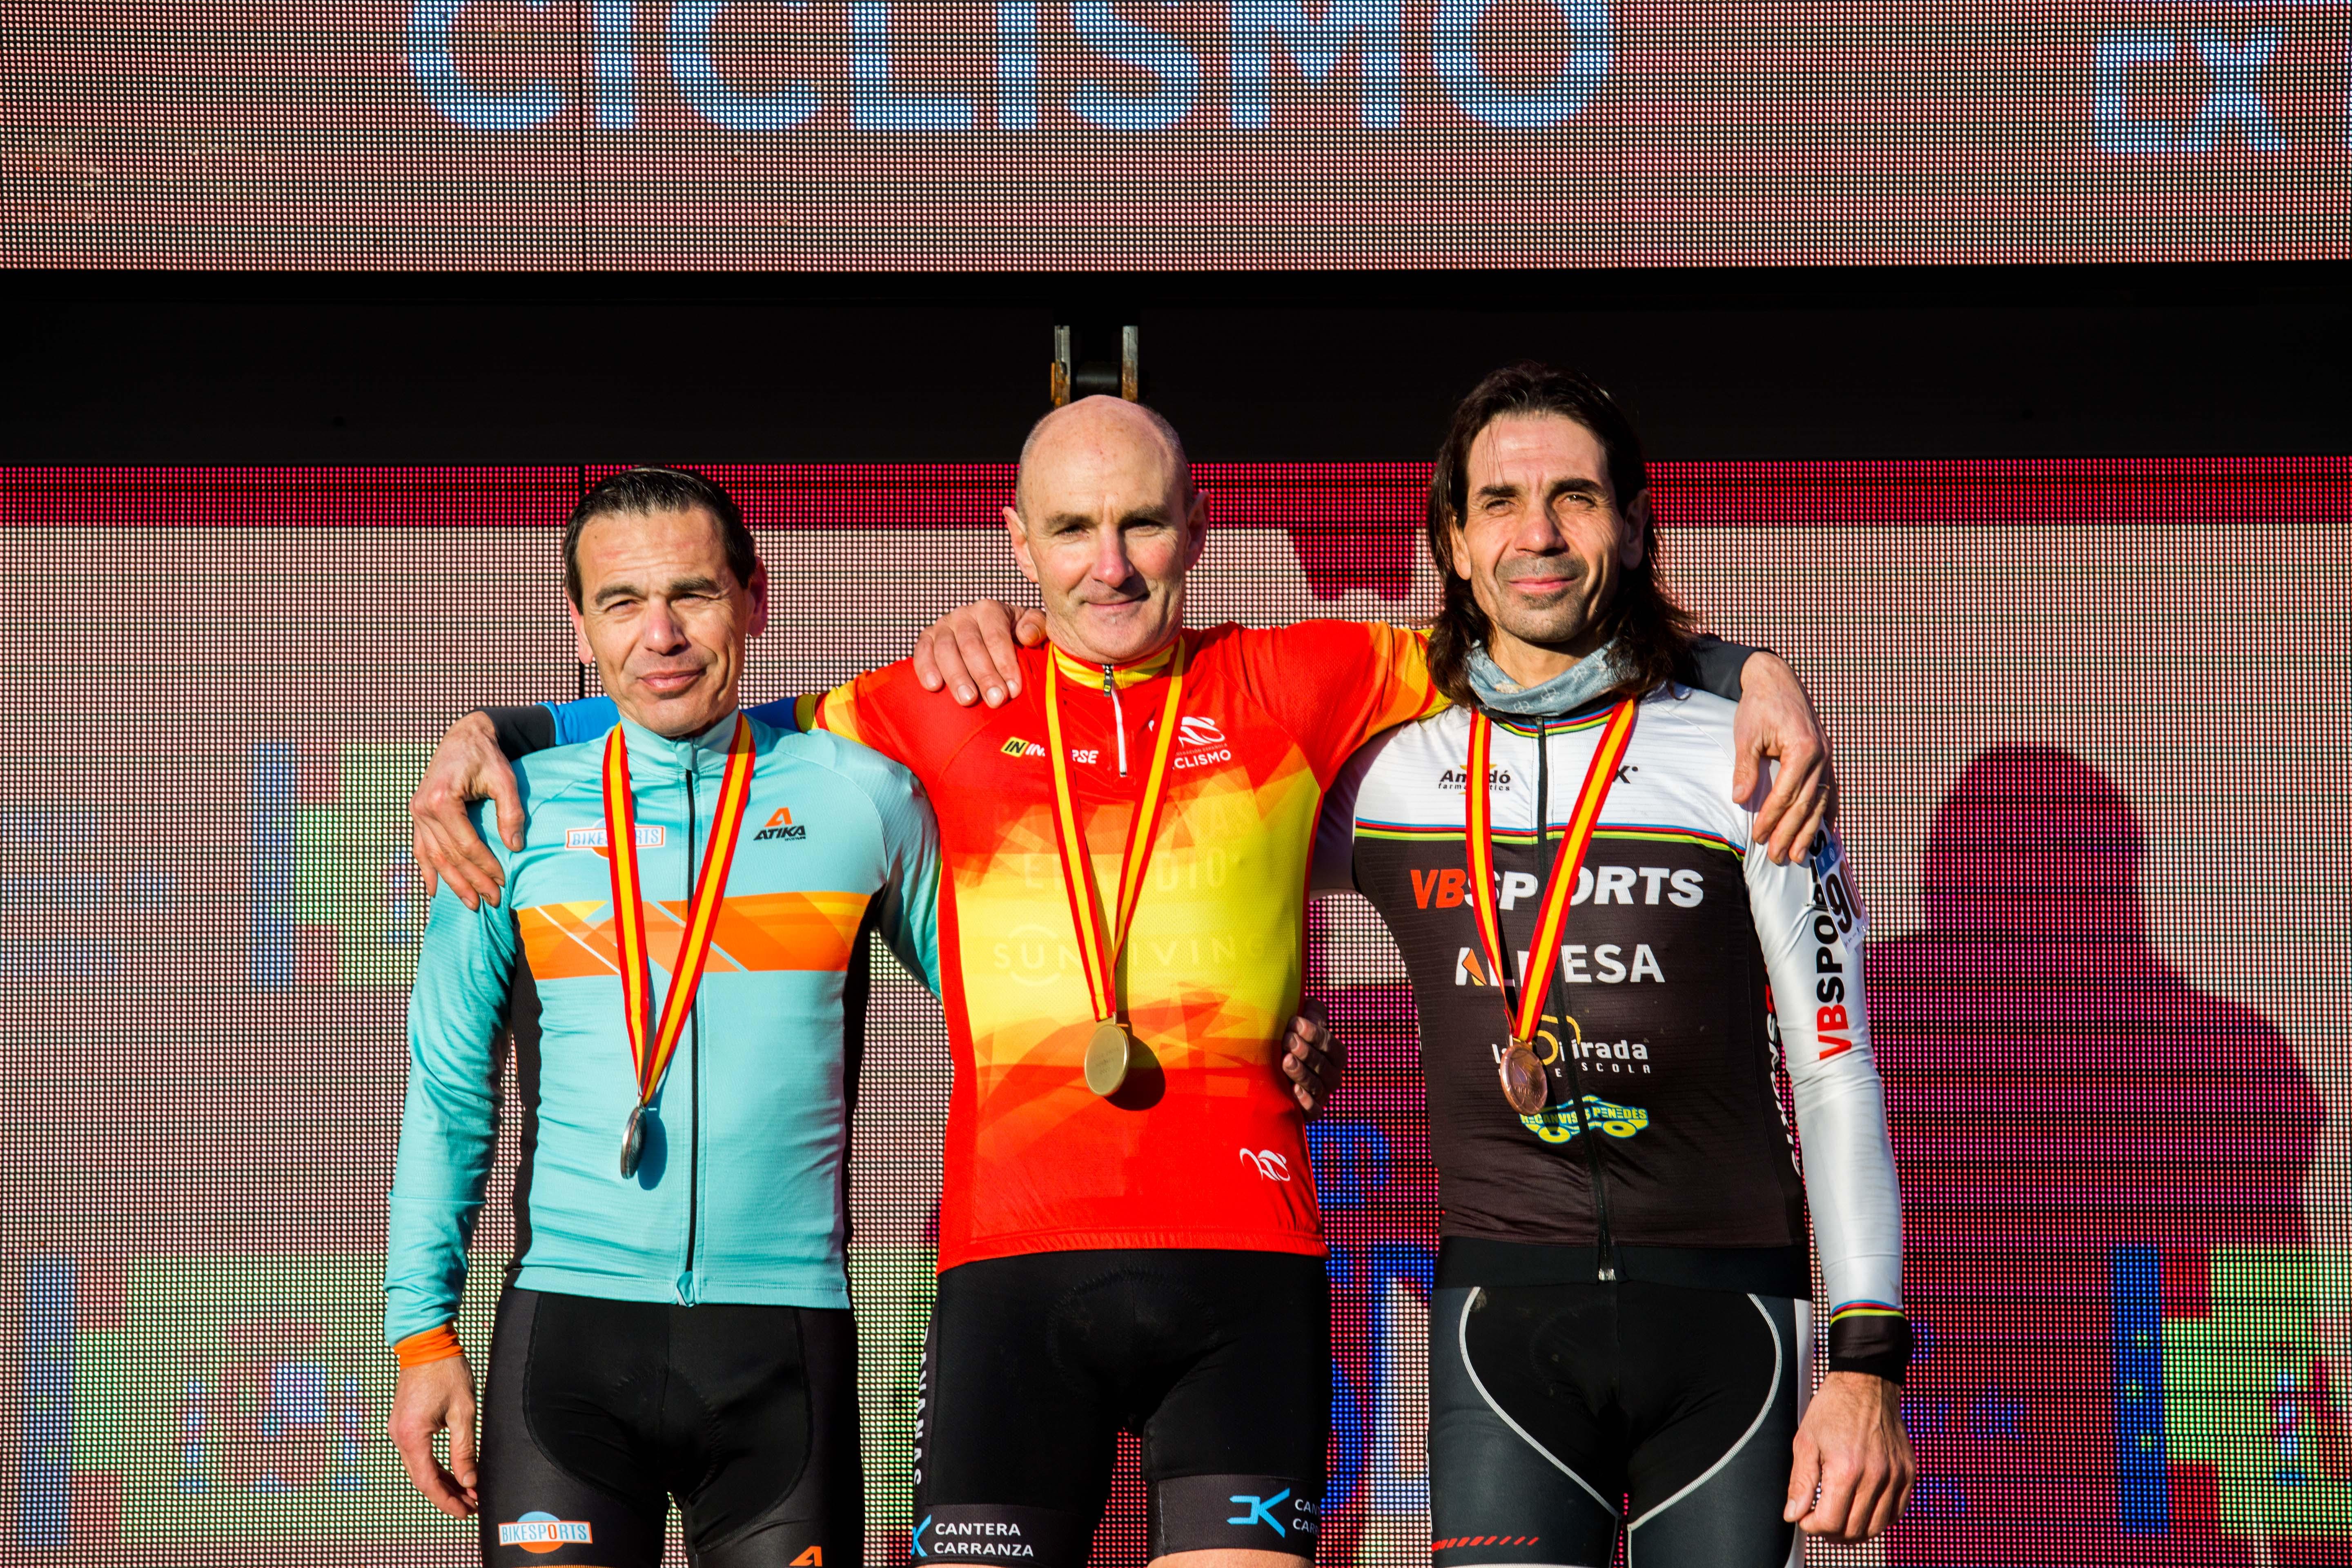 Igor Arrieta, nuevo Campeón de España Júnior de Ciclocross